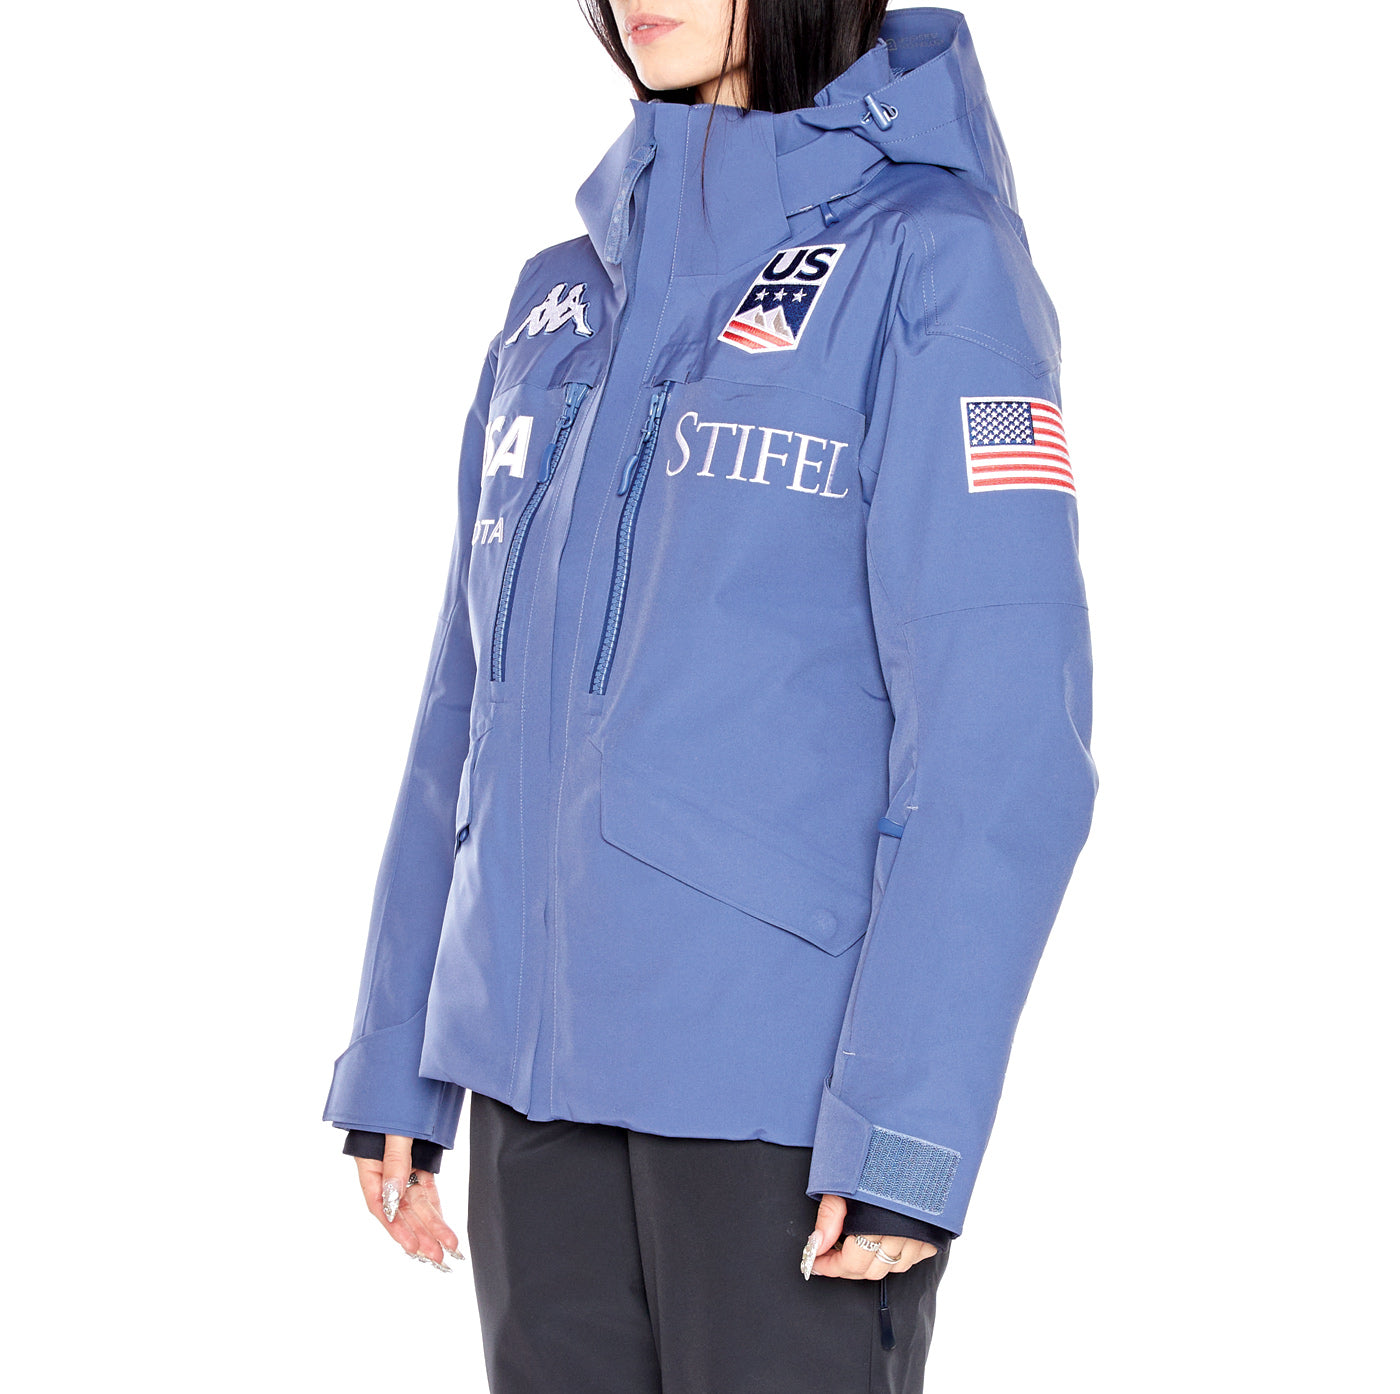 US Fiord Blue 604T Ski Jacket Kappa 6Cento – - USA